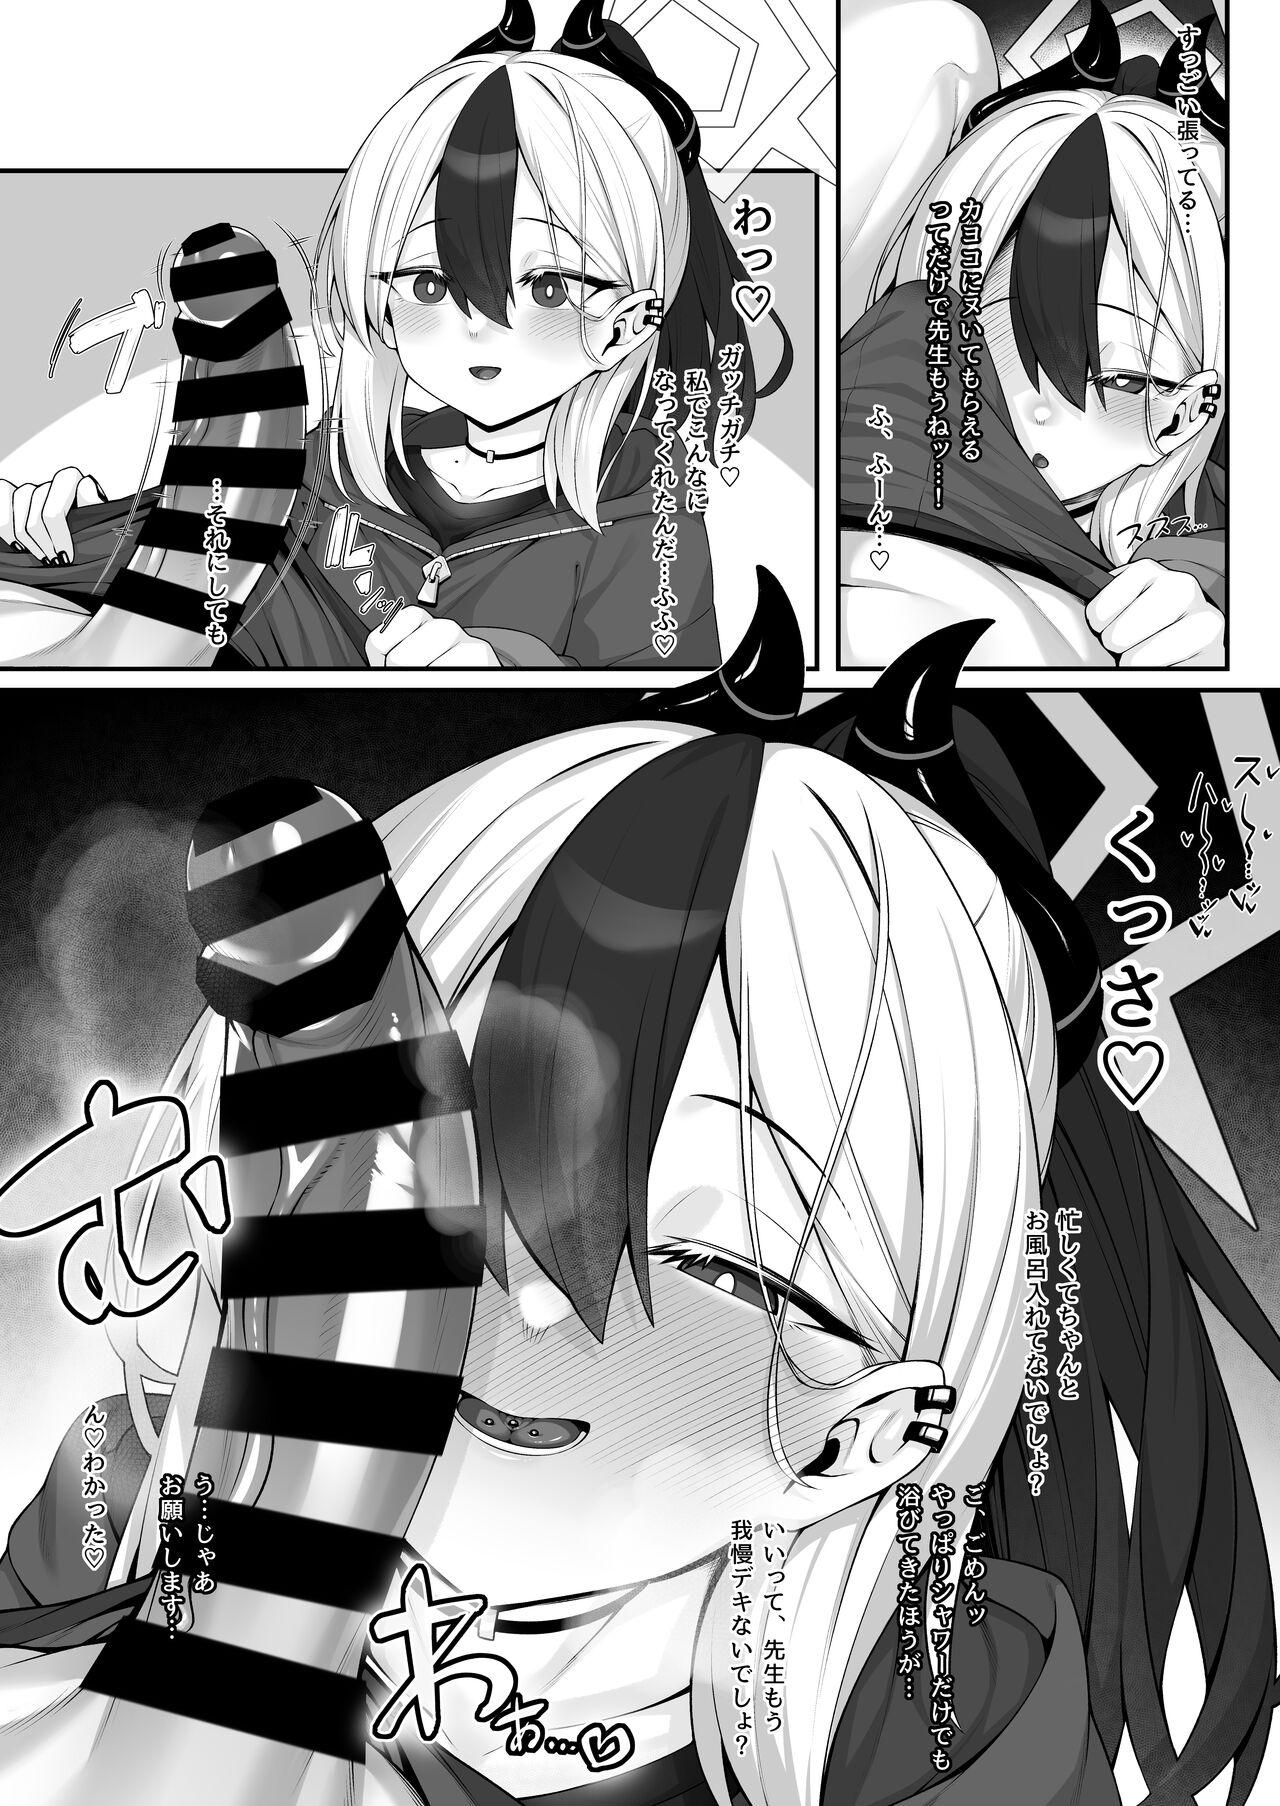 Pov Sex Sputum Shita-pi Kayoko ni Fella de Nuite Morau dake no Tanpen Manga - Blue archive Butts - Page 2